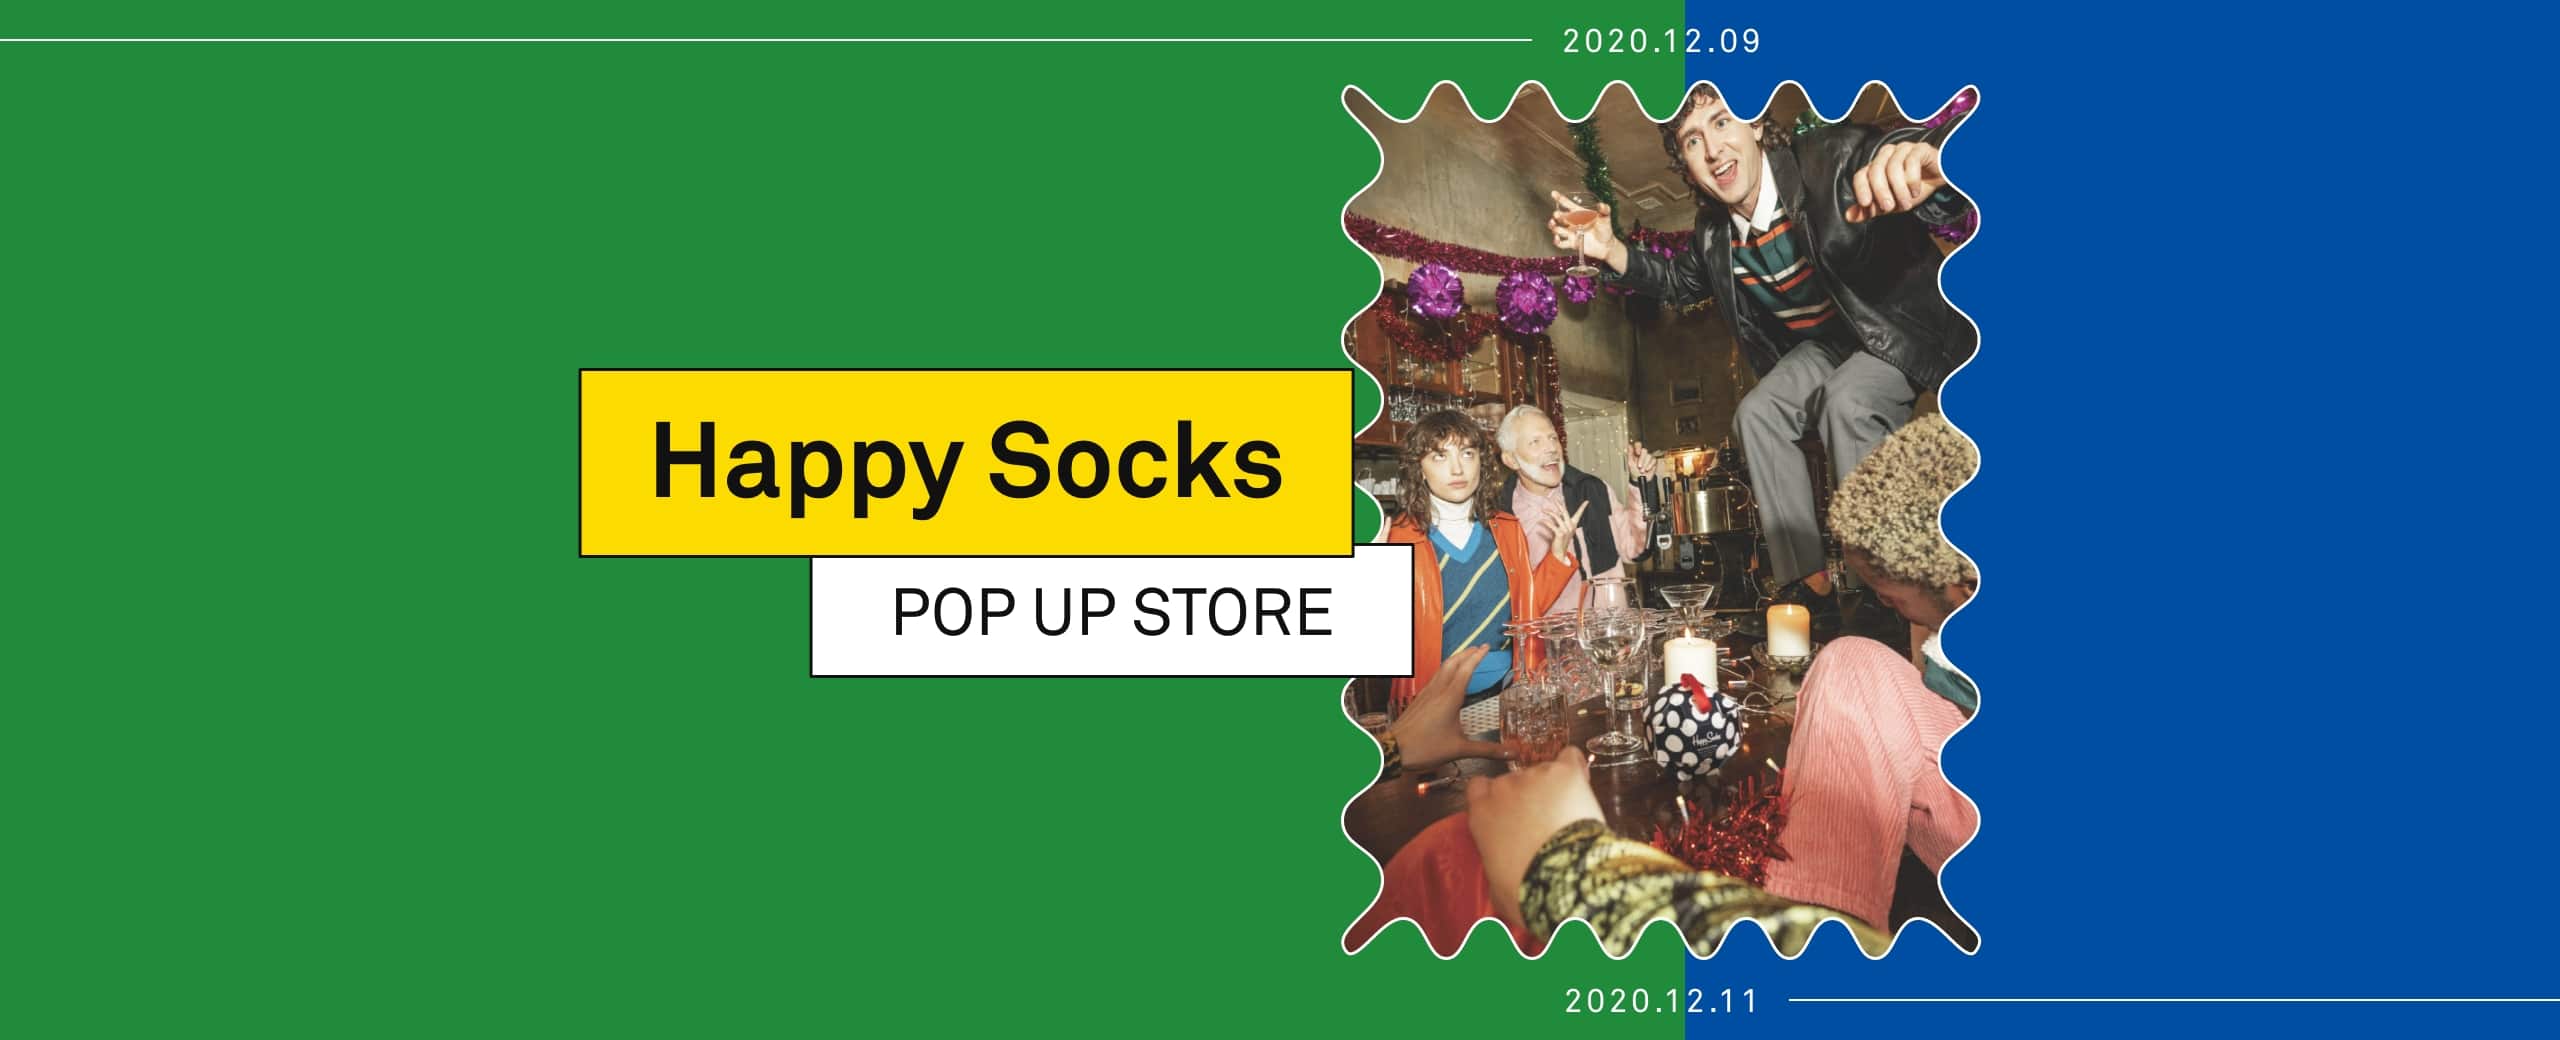 "Happy Socks POP UP STORE"